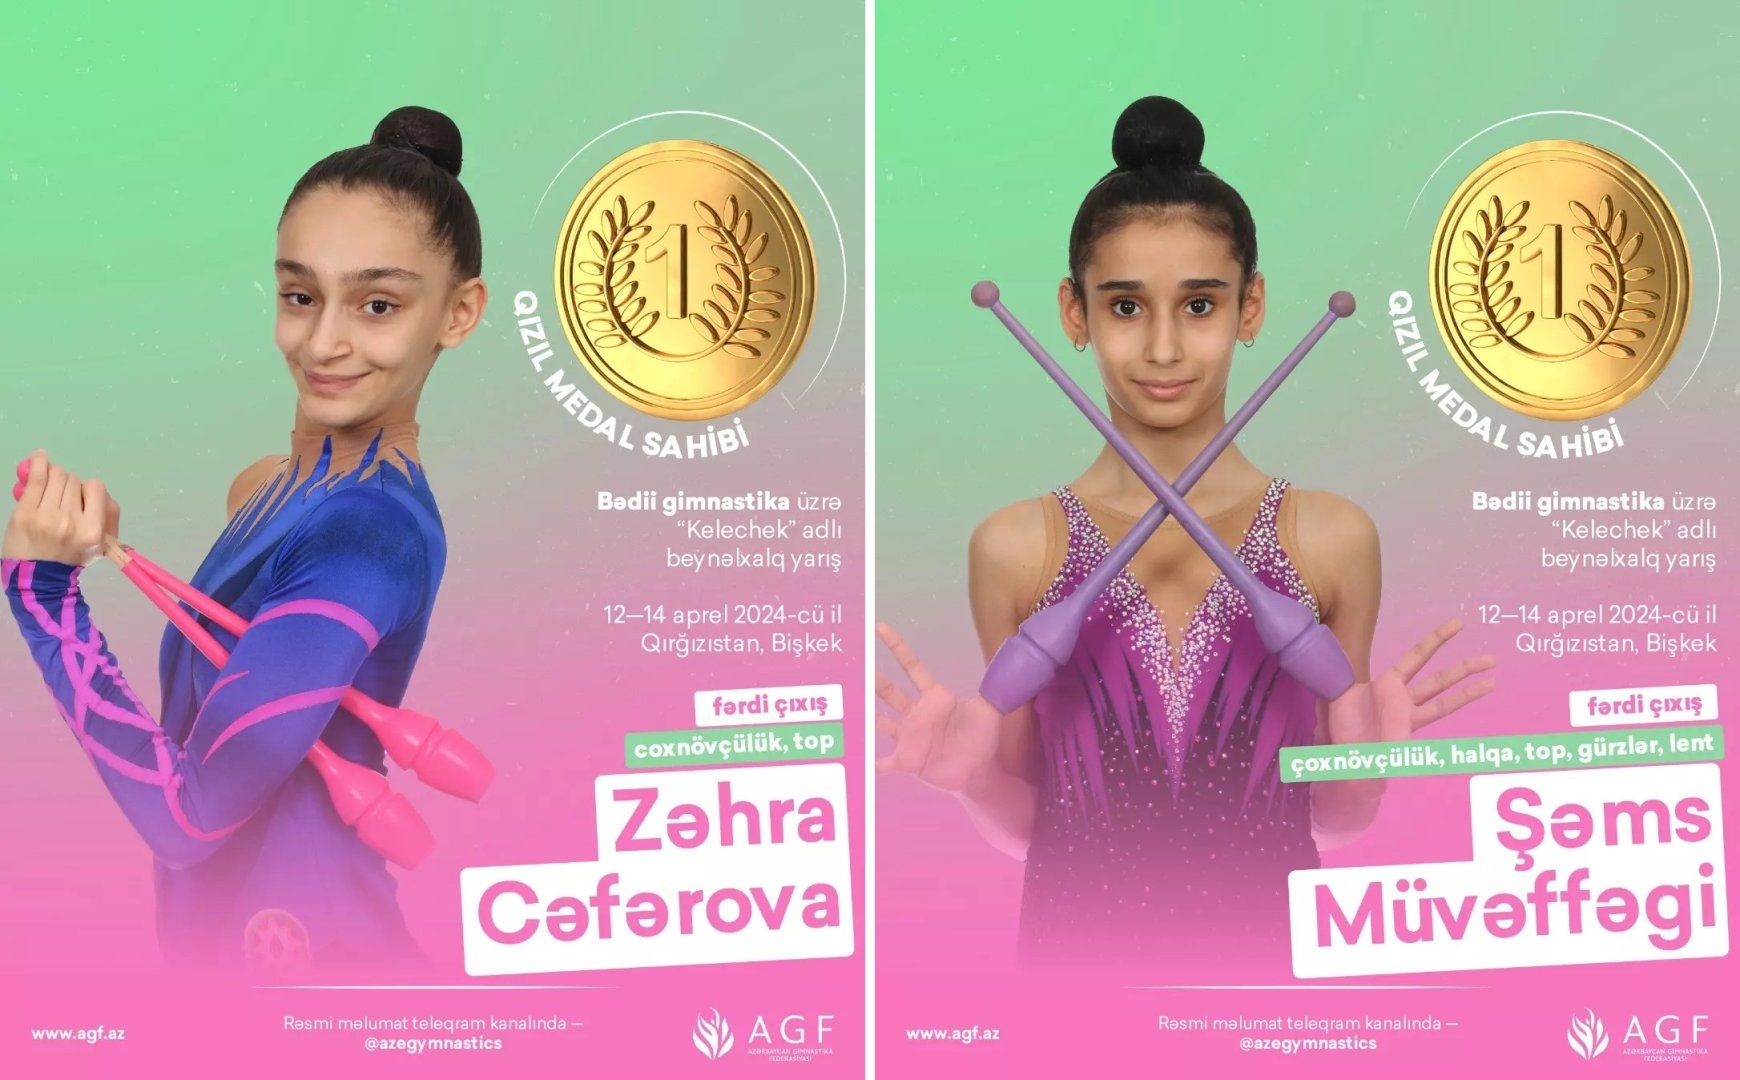 Azerbaijani gymnasts claim gold medals at int'l tournament